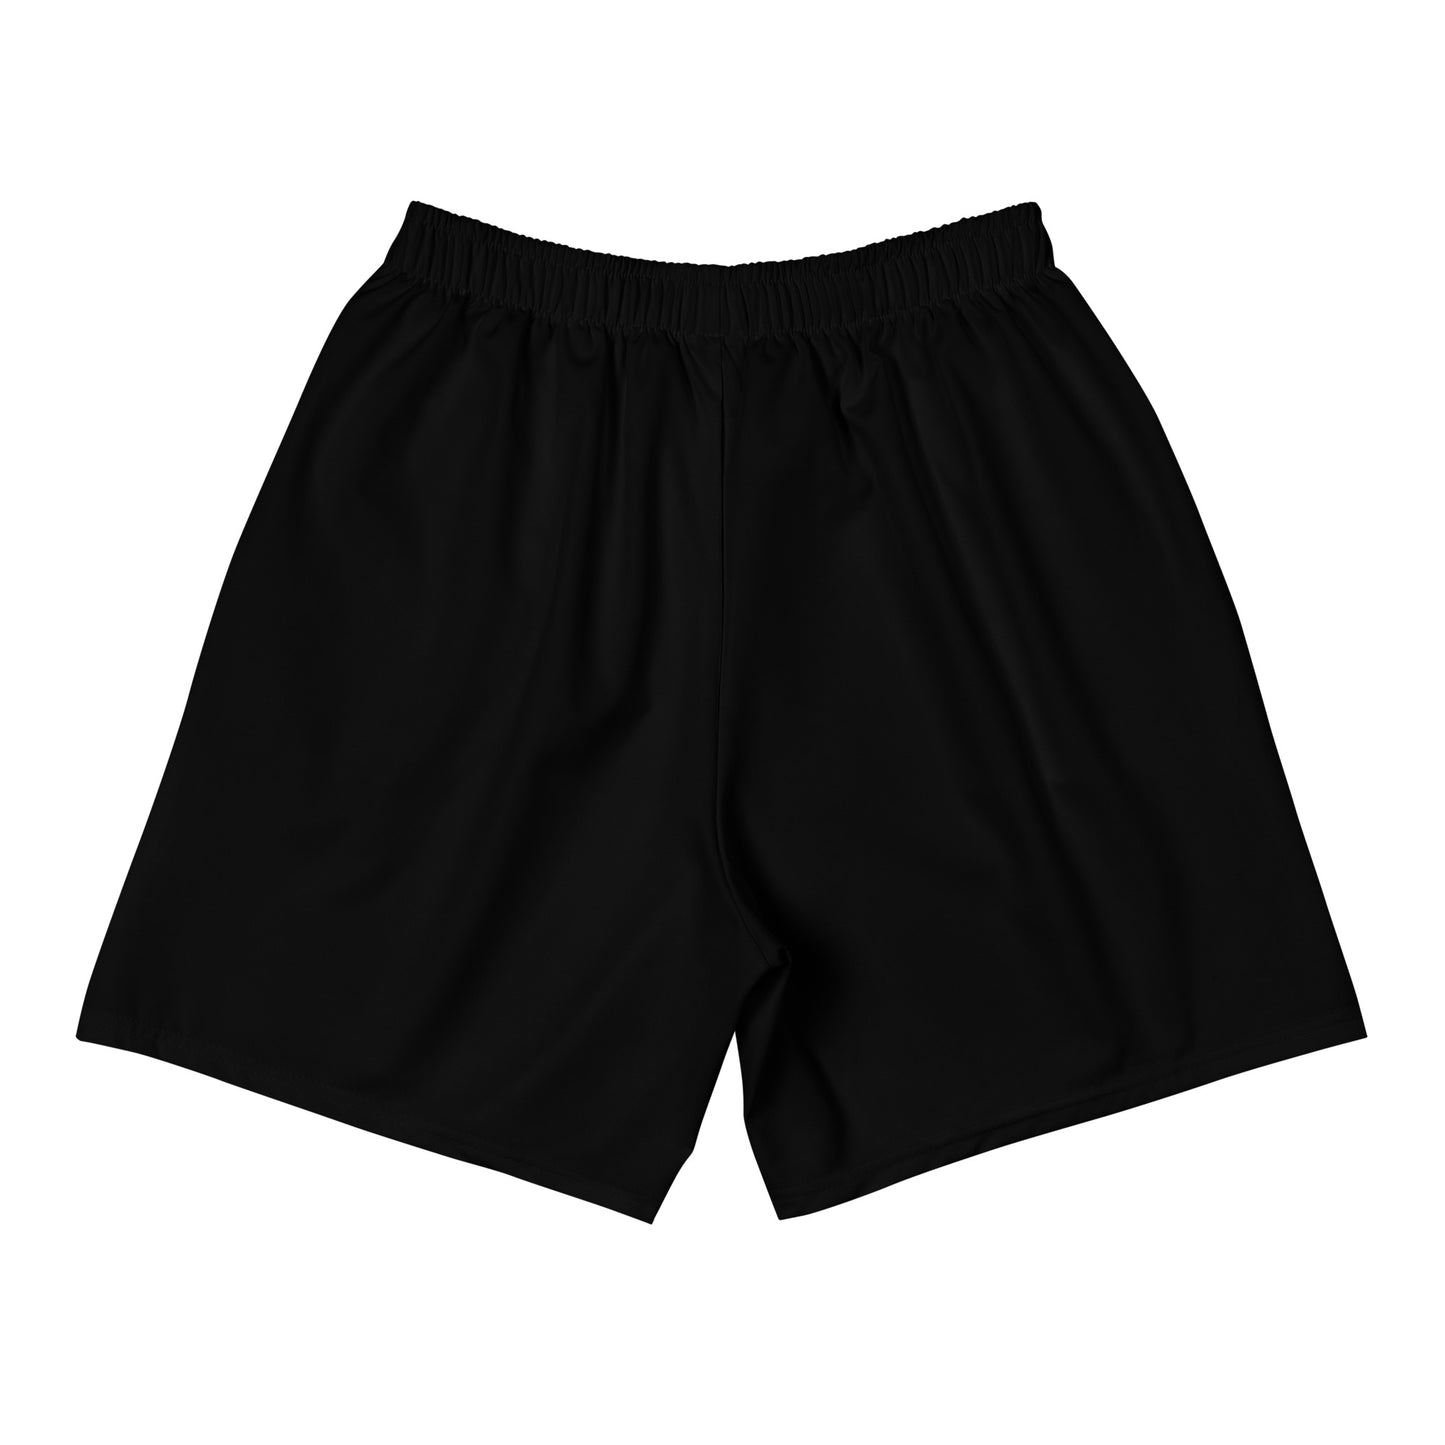 Menkrav Initiate sports shorts black